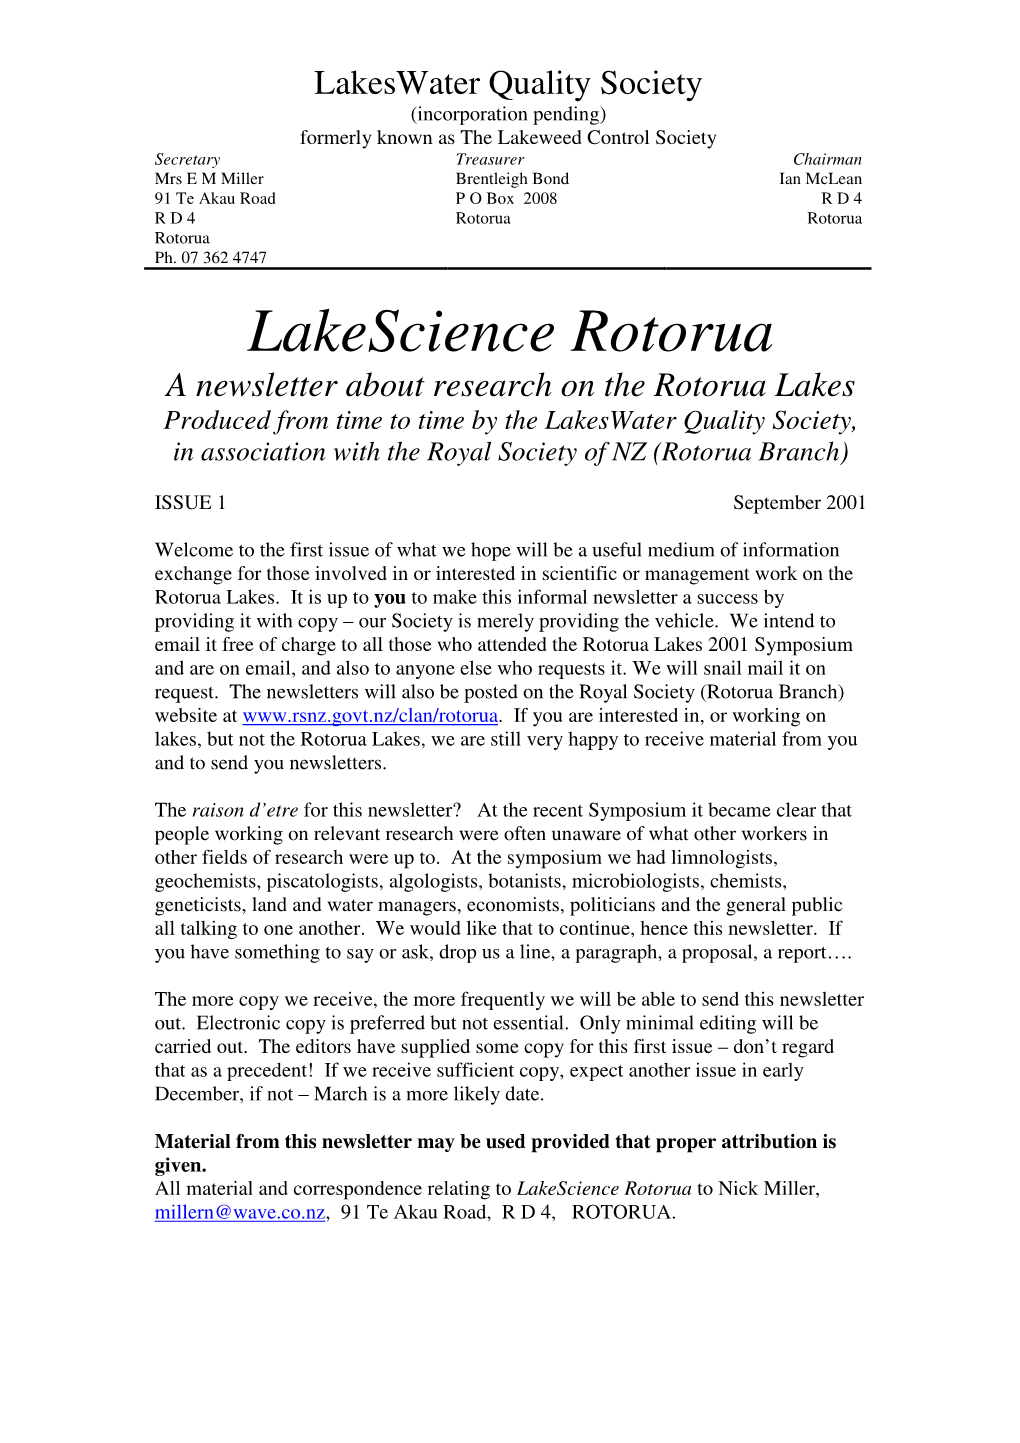 Lakescience Rotorua